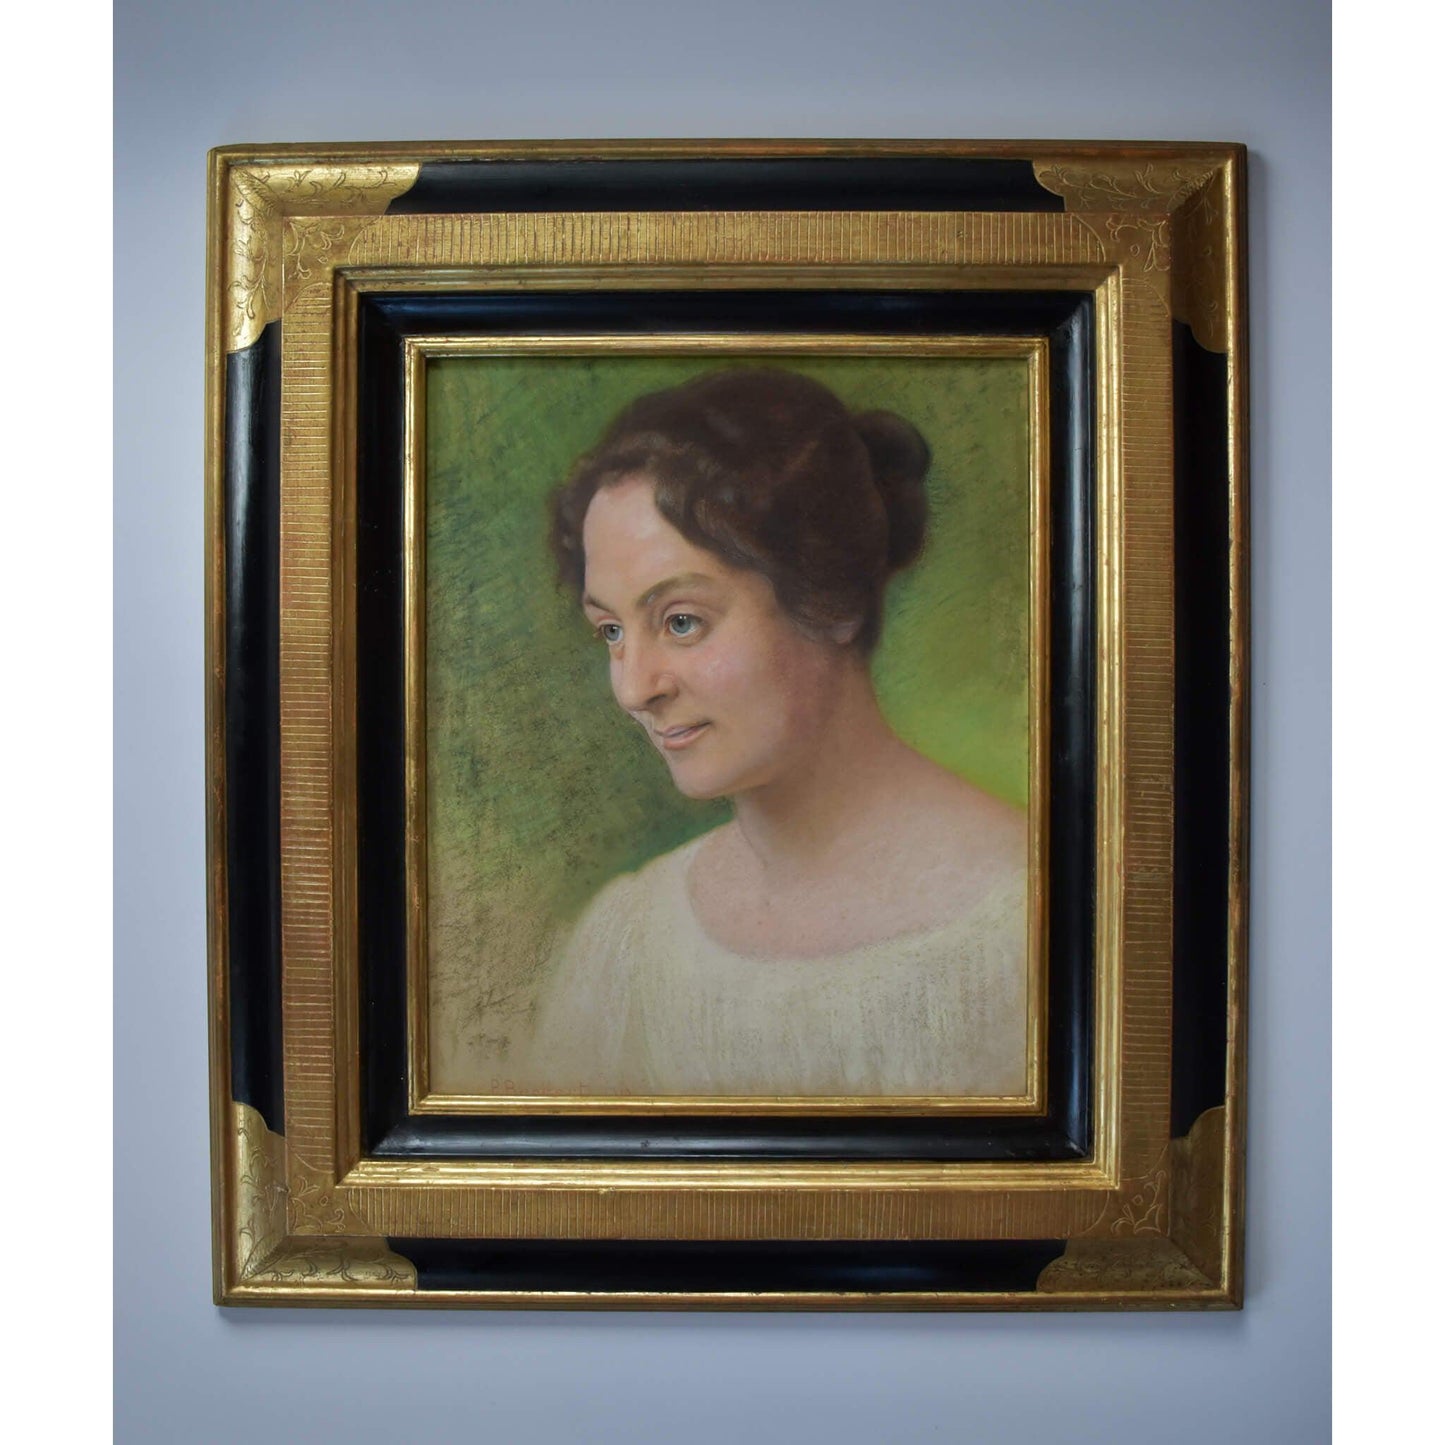 Antique portrait painting woman pastel original 1919 by Paul Beckert for sale at Winckelmann Gallery